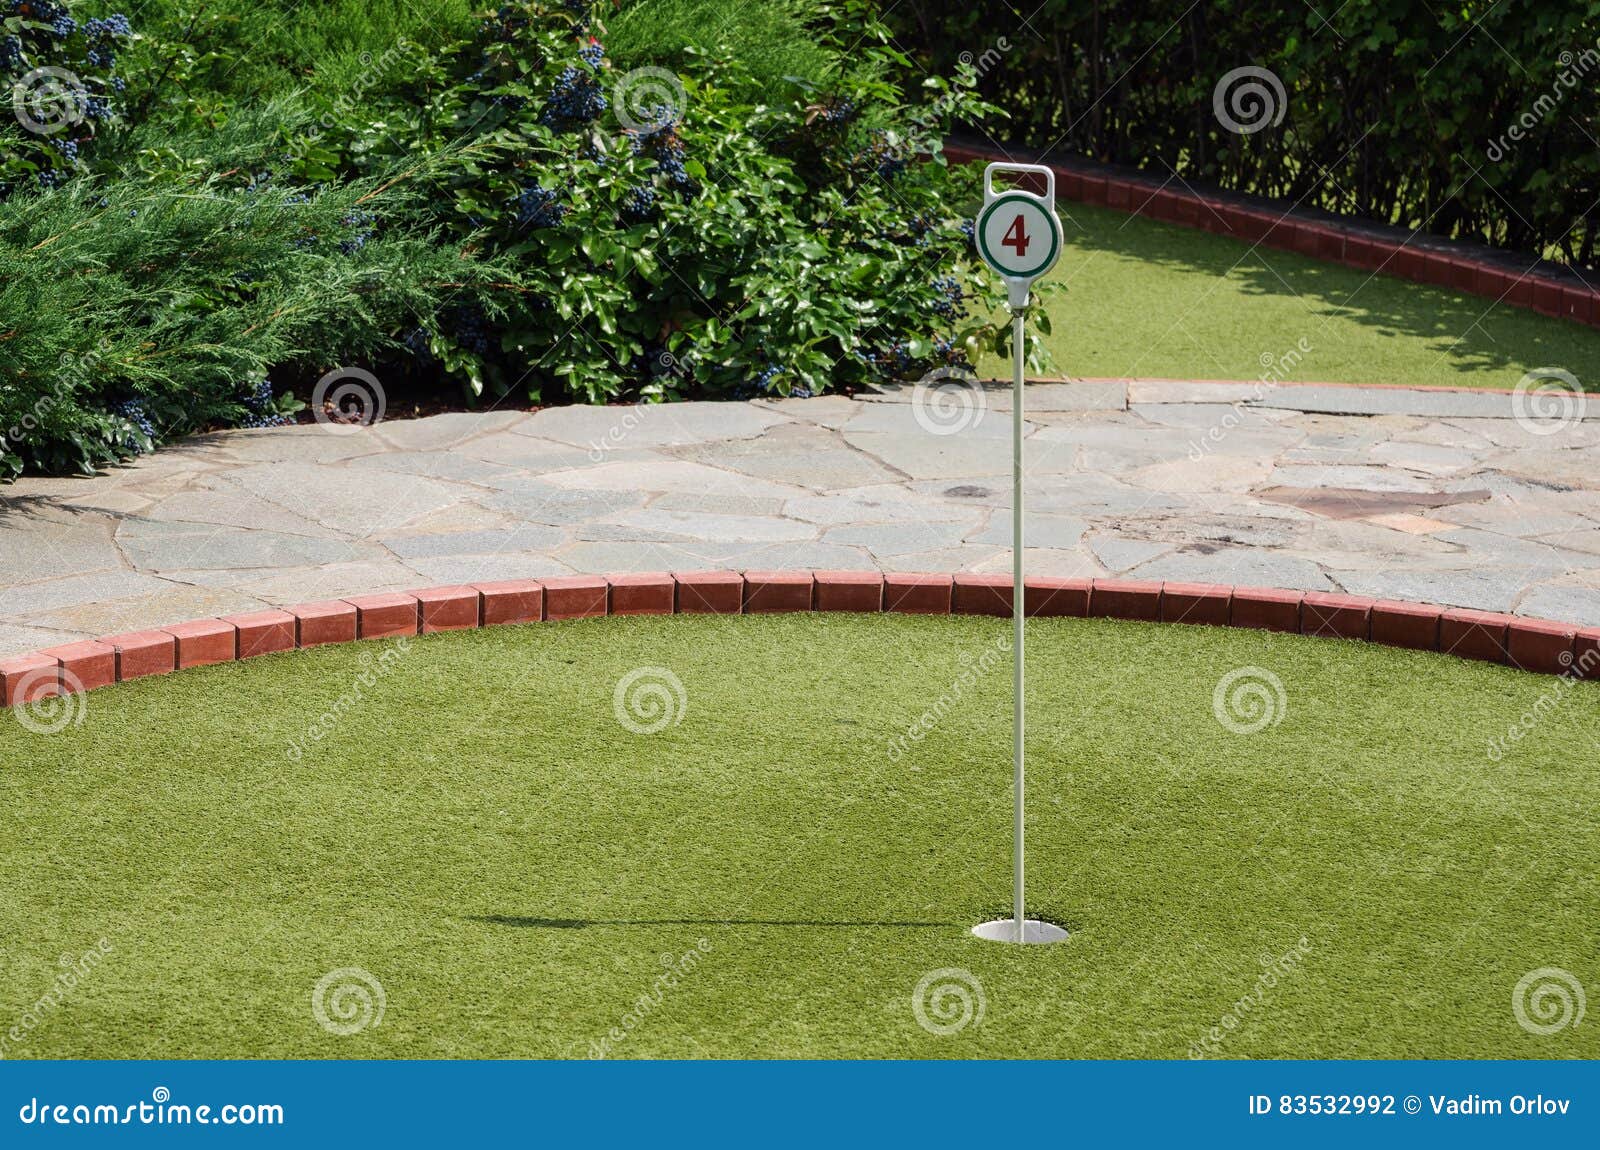 Playground For Mini Golf Stock Photo Image Of Greenery 83532992